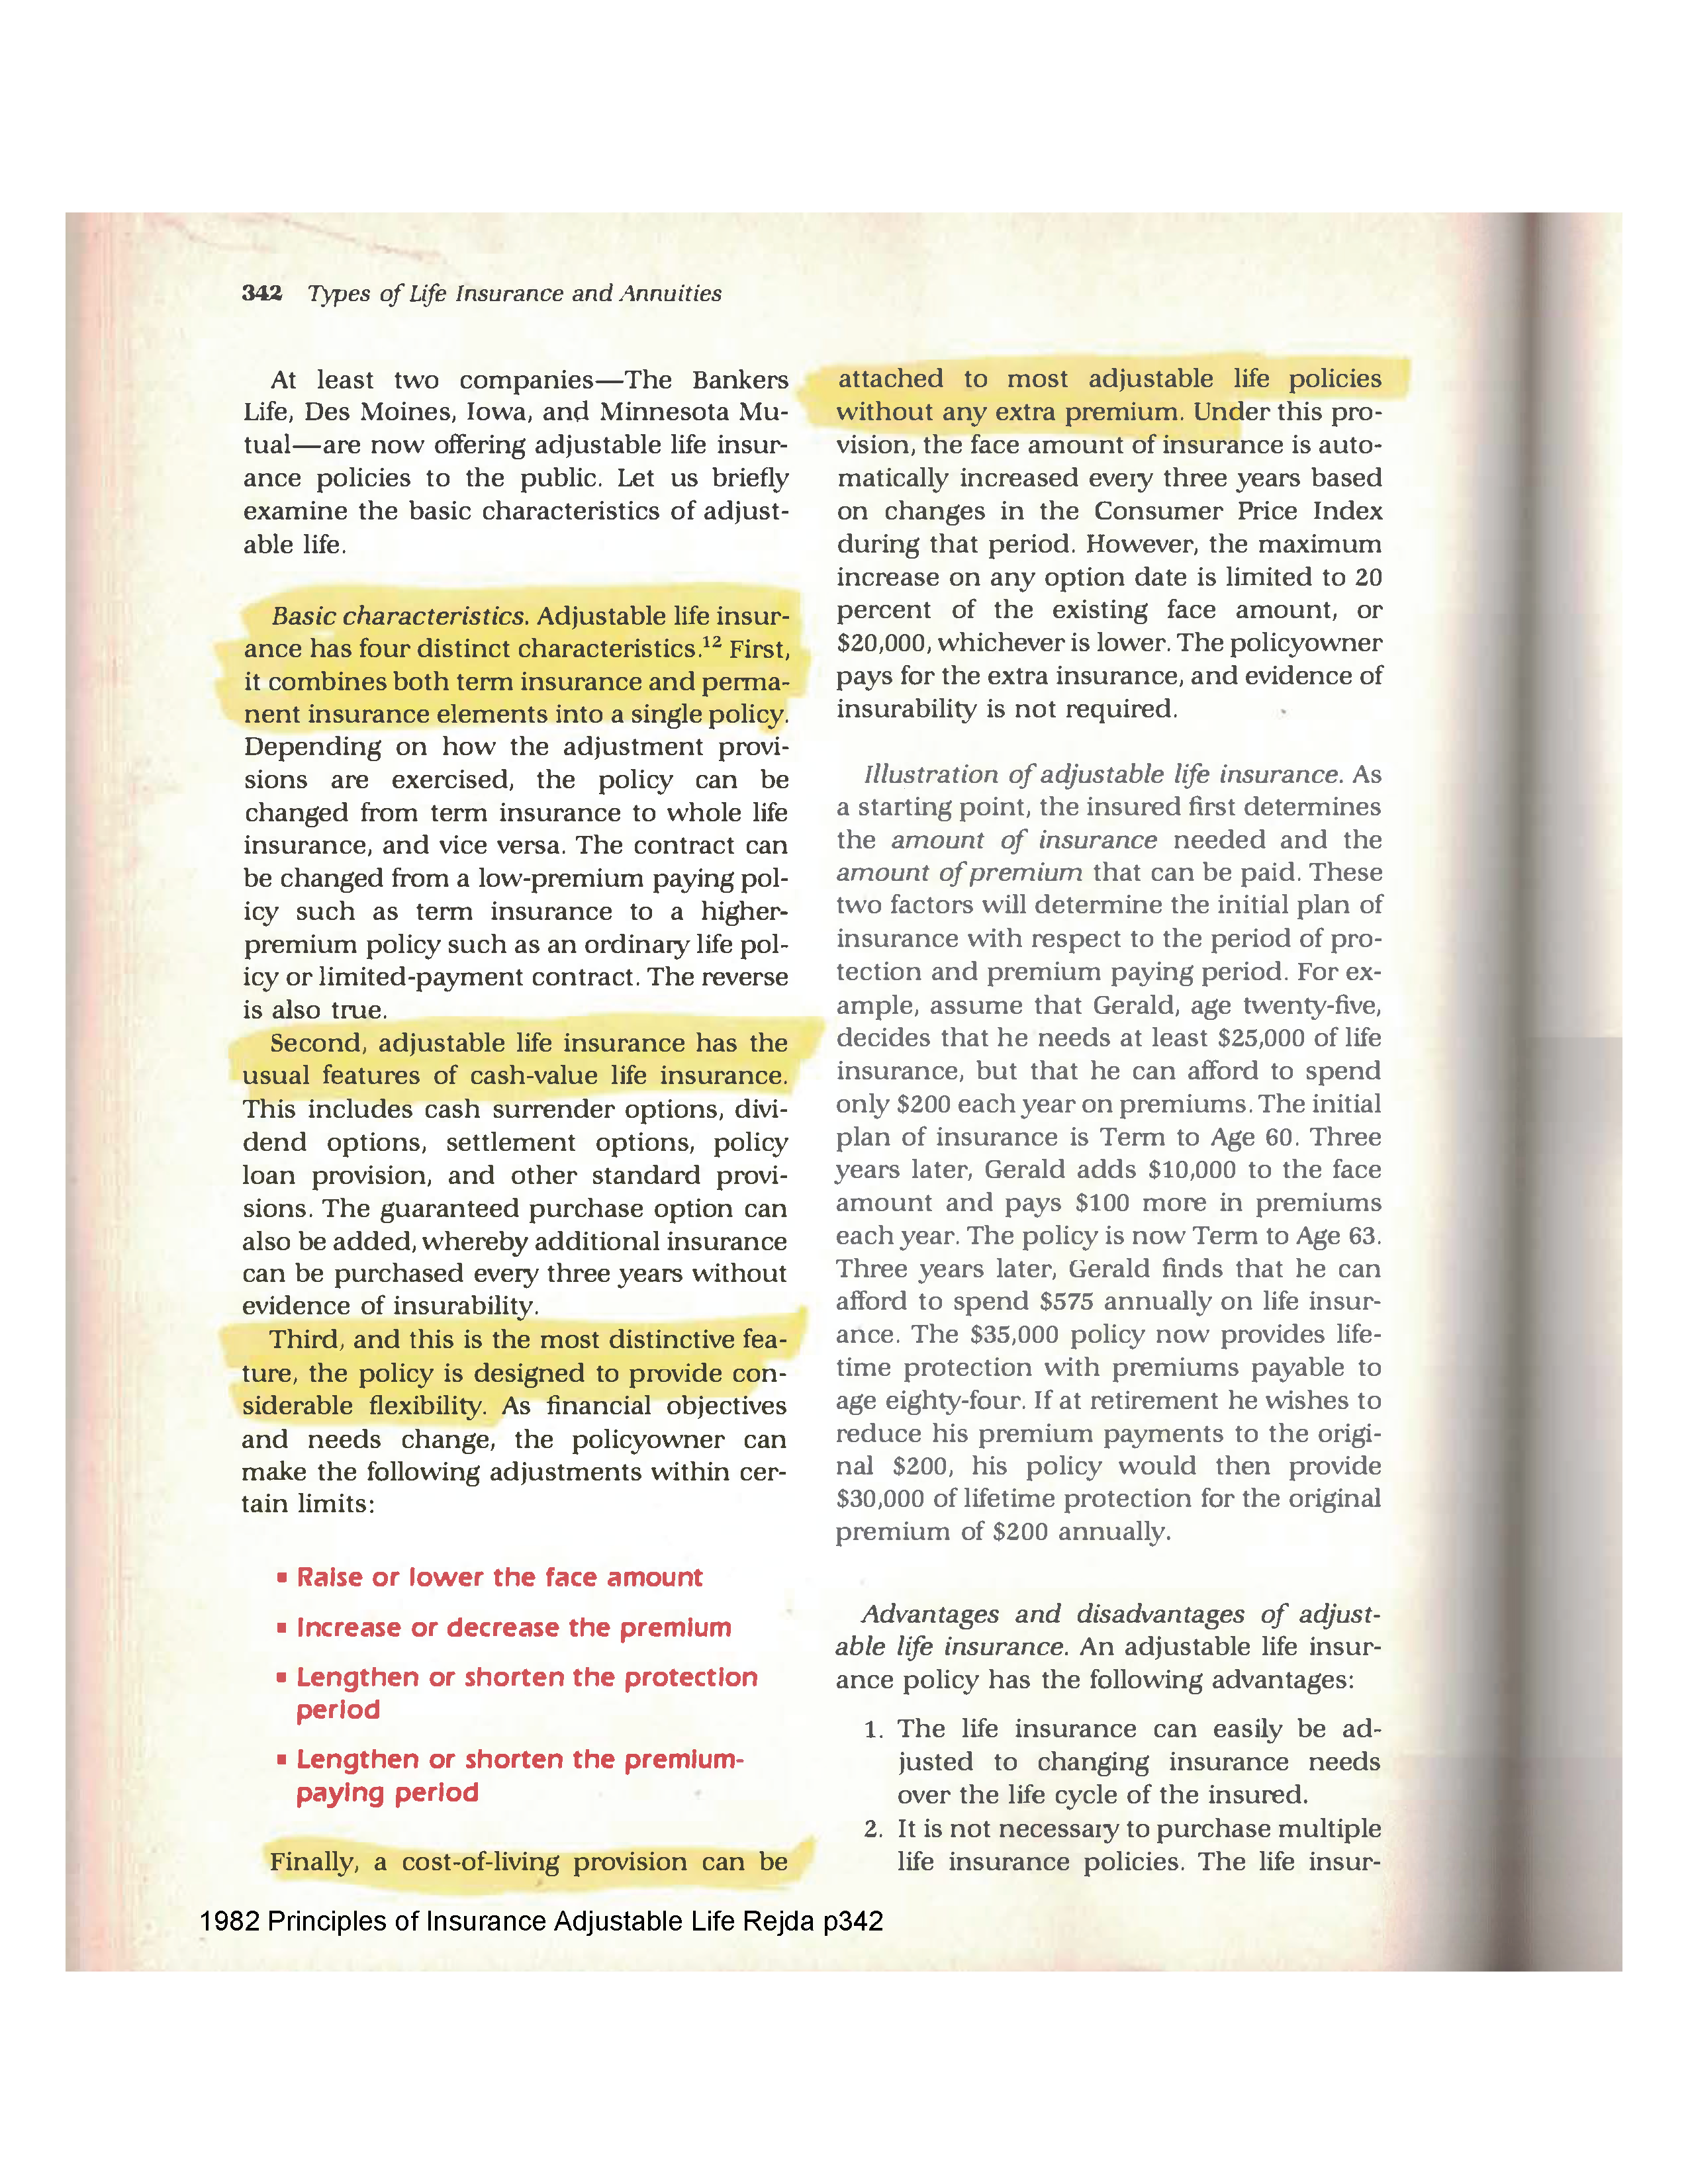 1982 Principles of Insurance Adjustable Life George Rejda p342